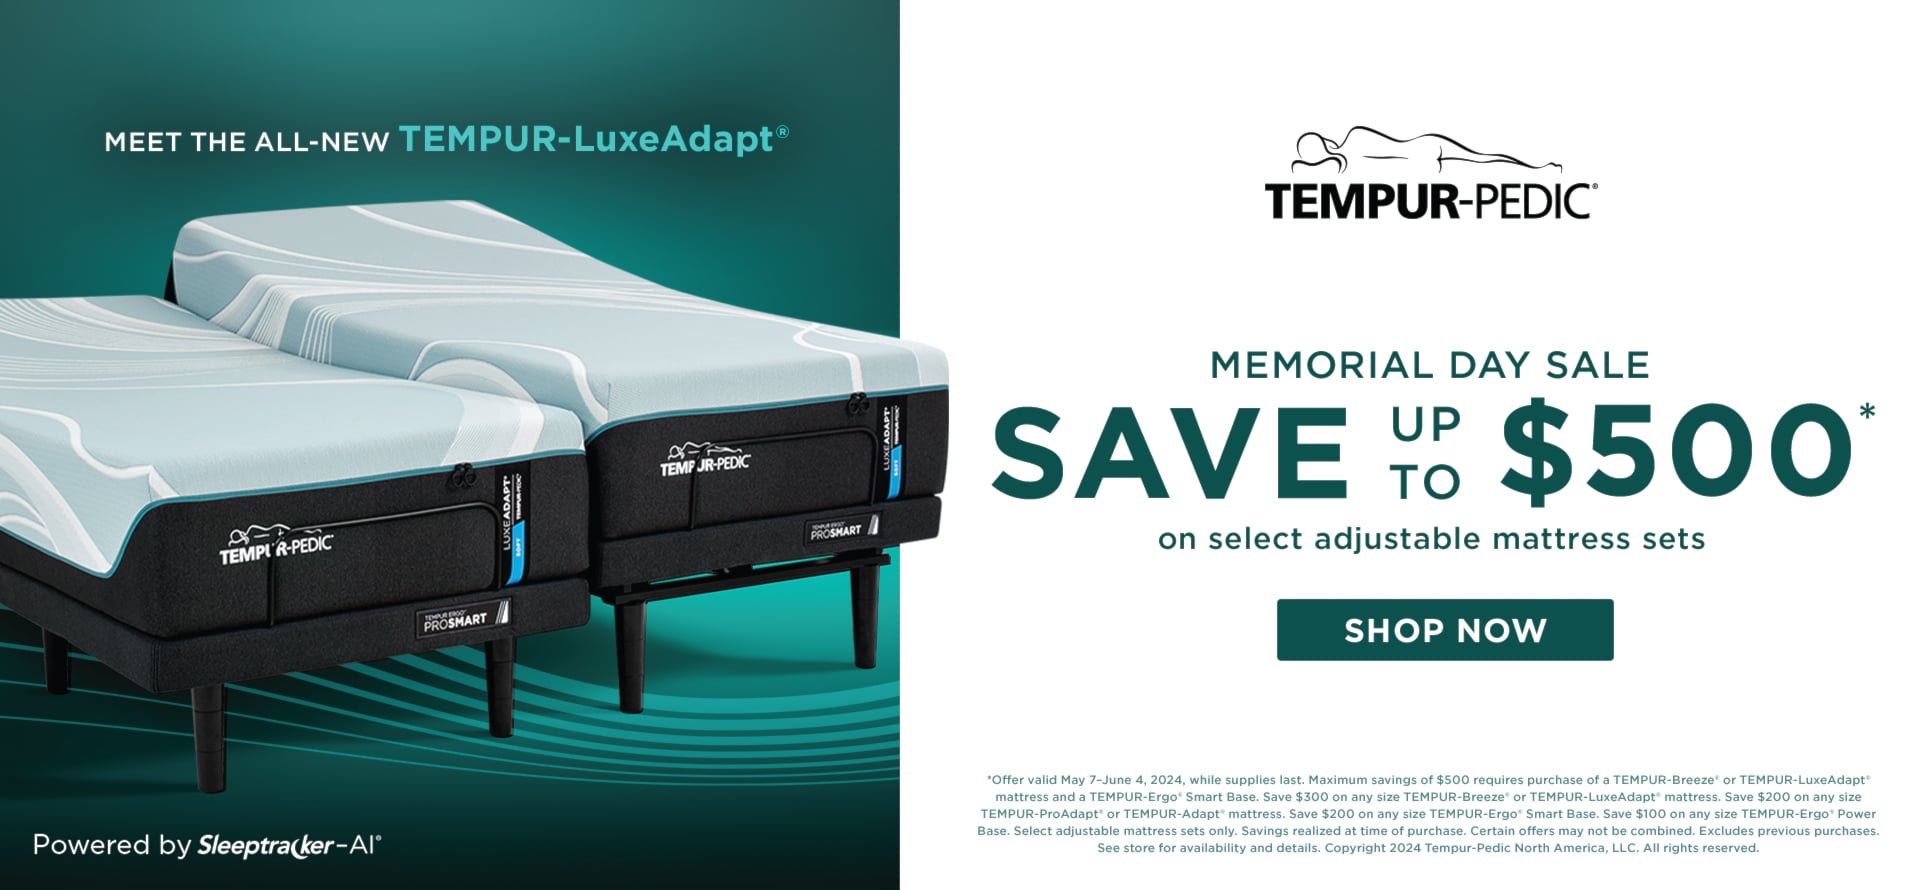 Save up $500 on Select Adjustable Tempur-Pedic Mattress Sets | Shop Now